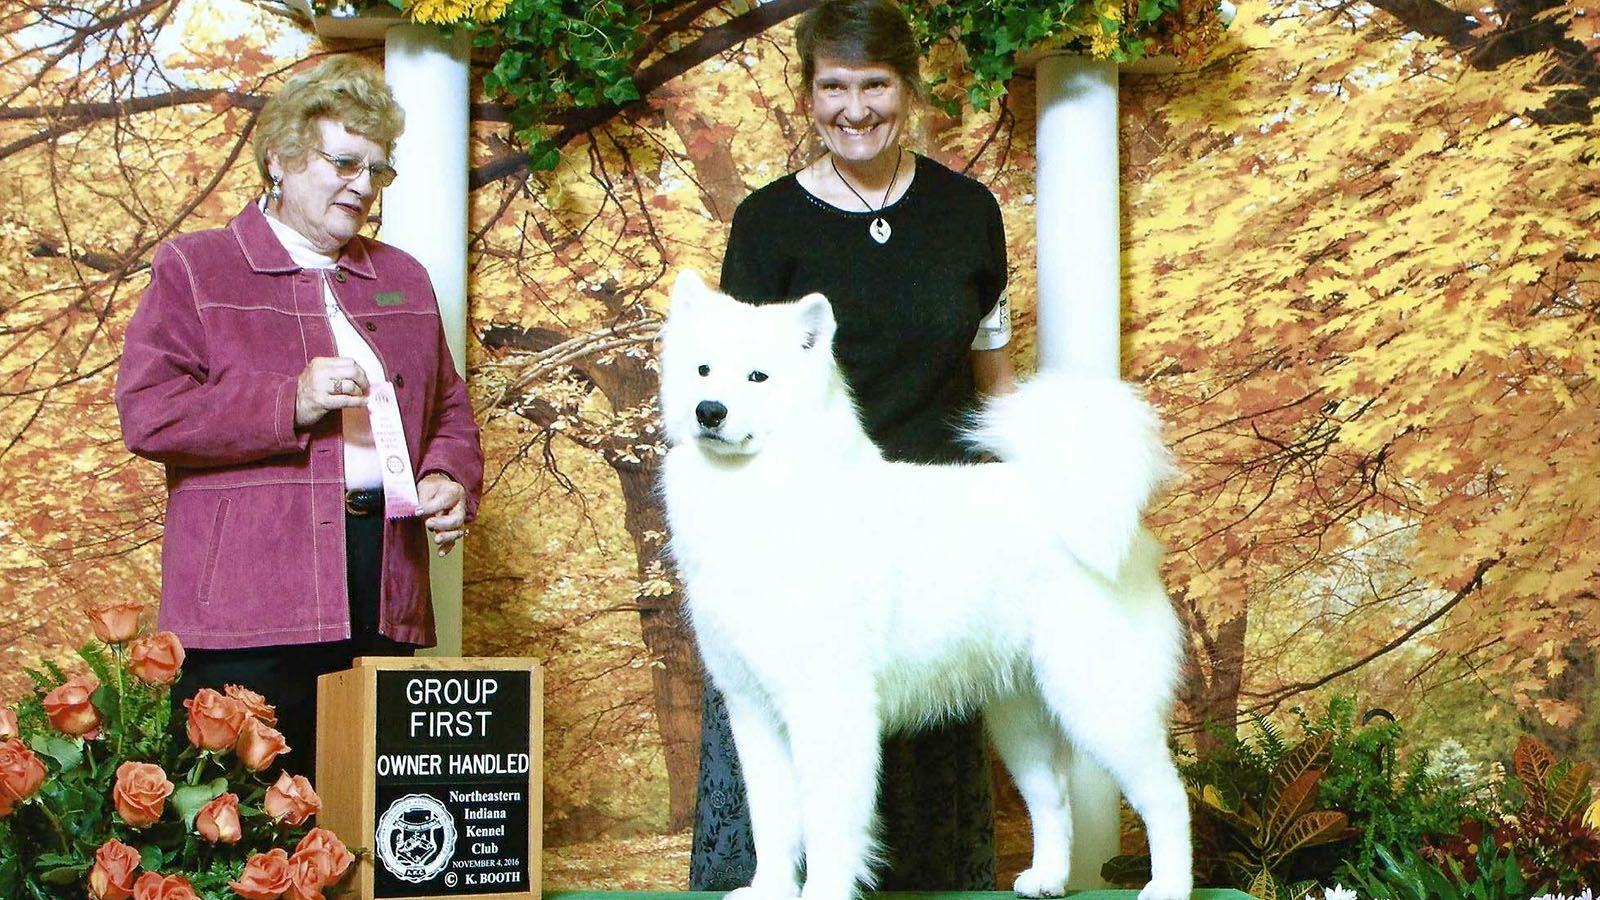 The Old Fort Cluster Dog Show runs Nov. 3-6 at Memorial Coliseum.